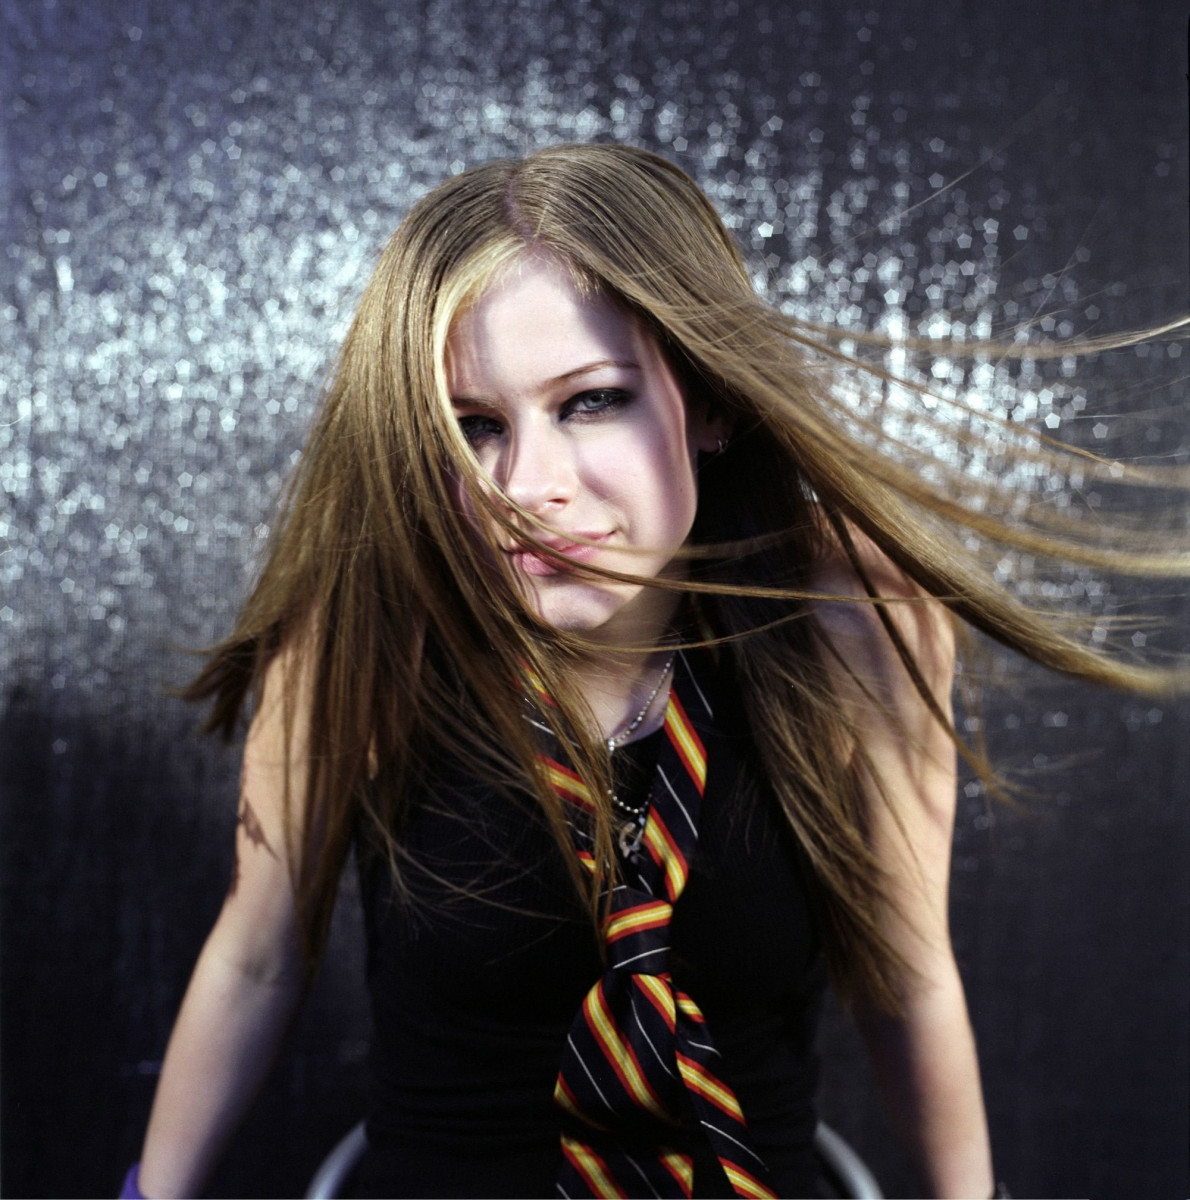 Avril Lavigne Photo 913 Of 1345 Pics Wallpaper Photo Theplace2